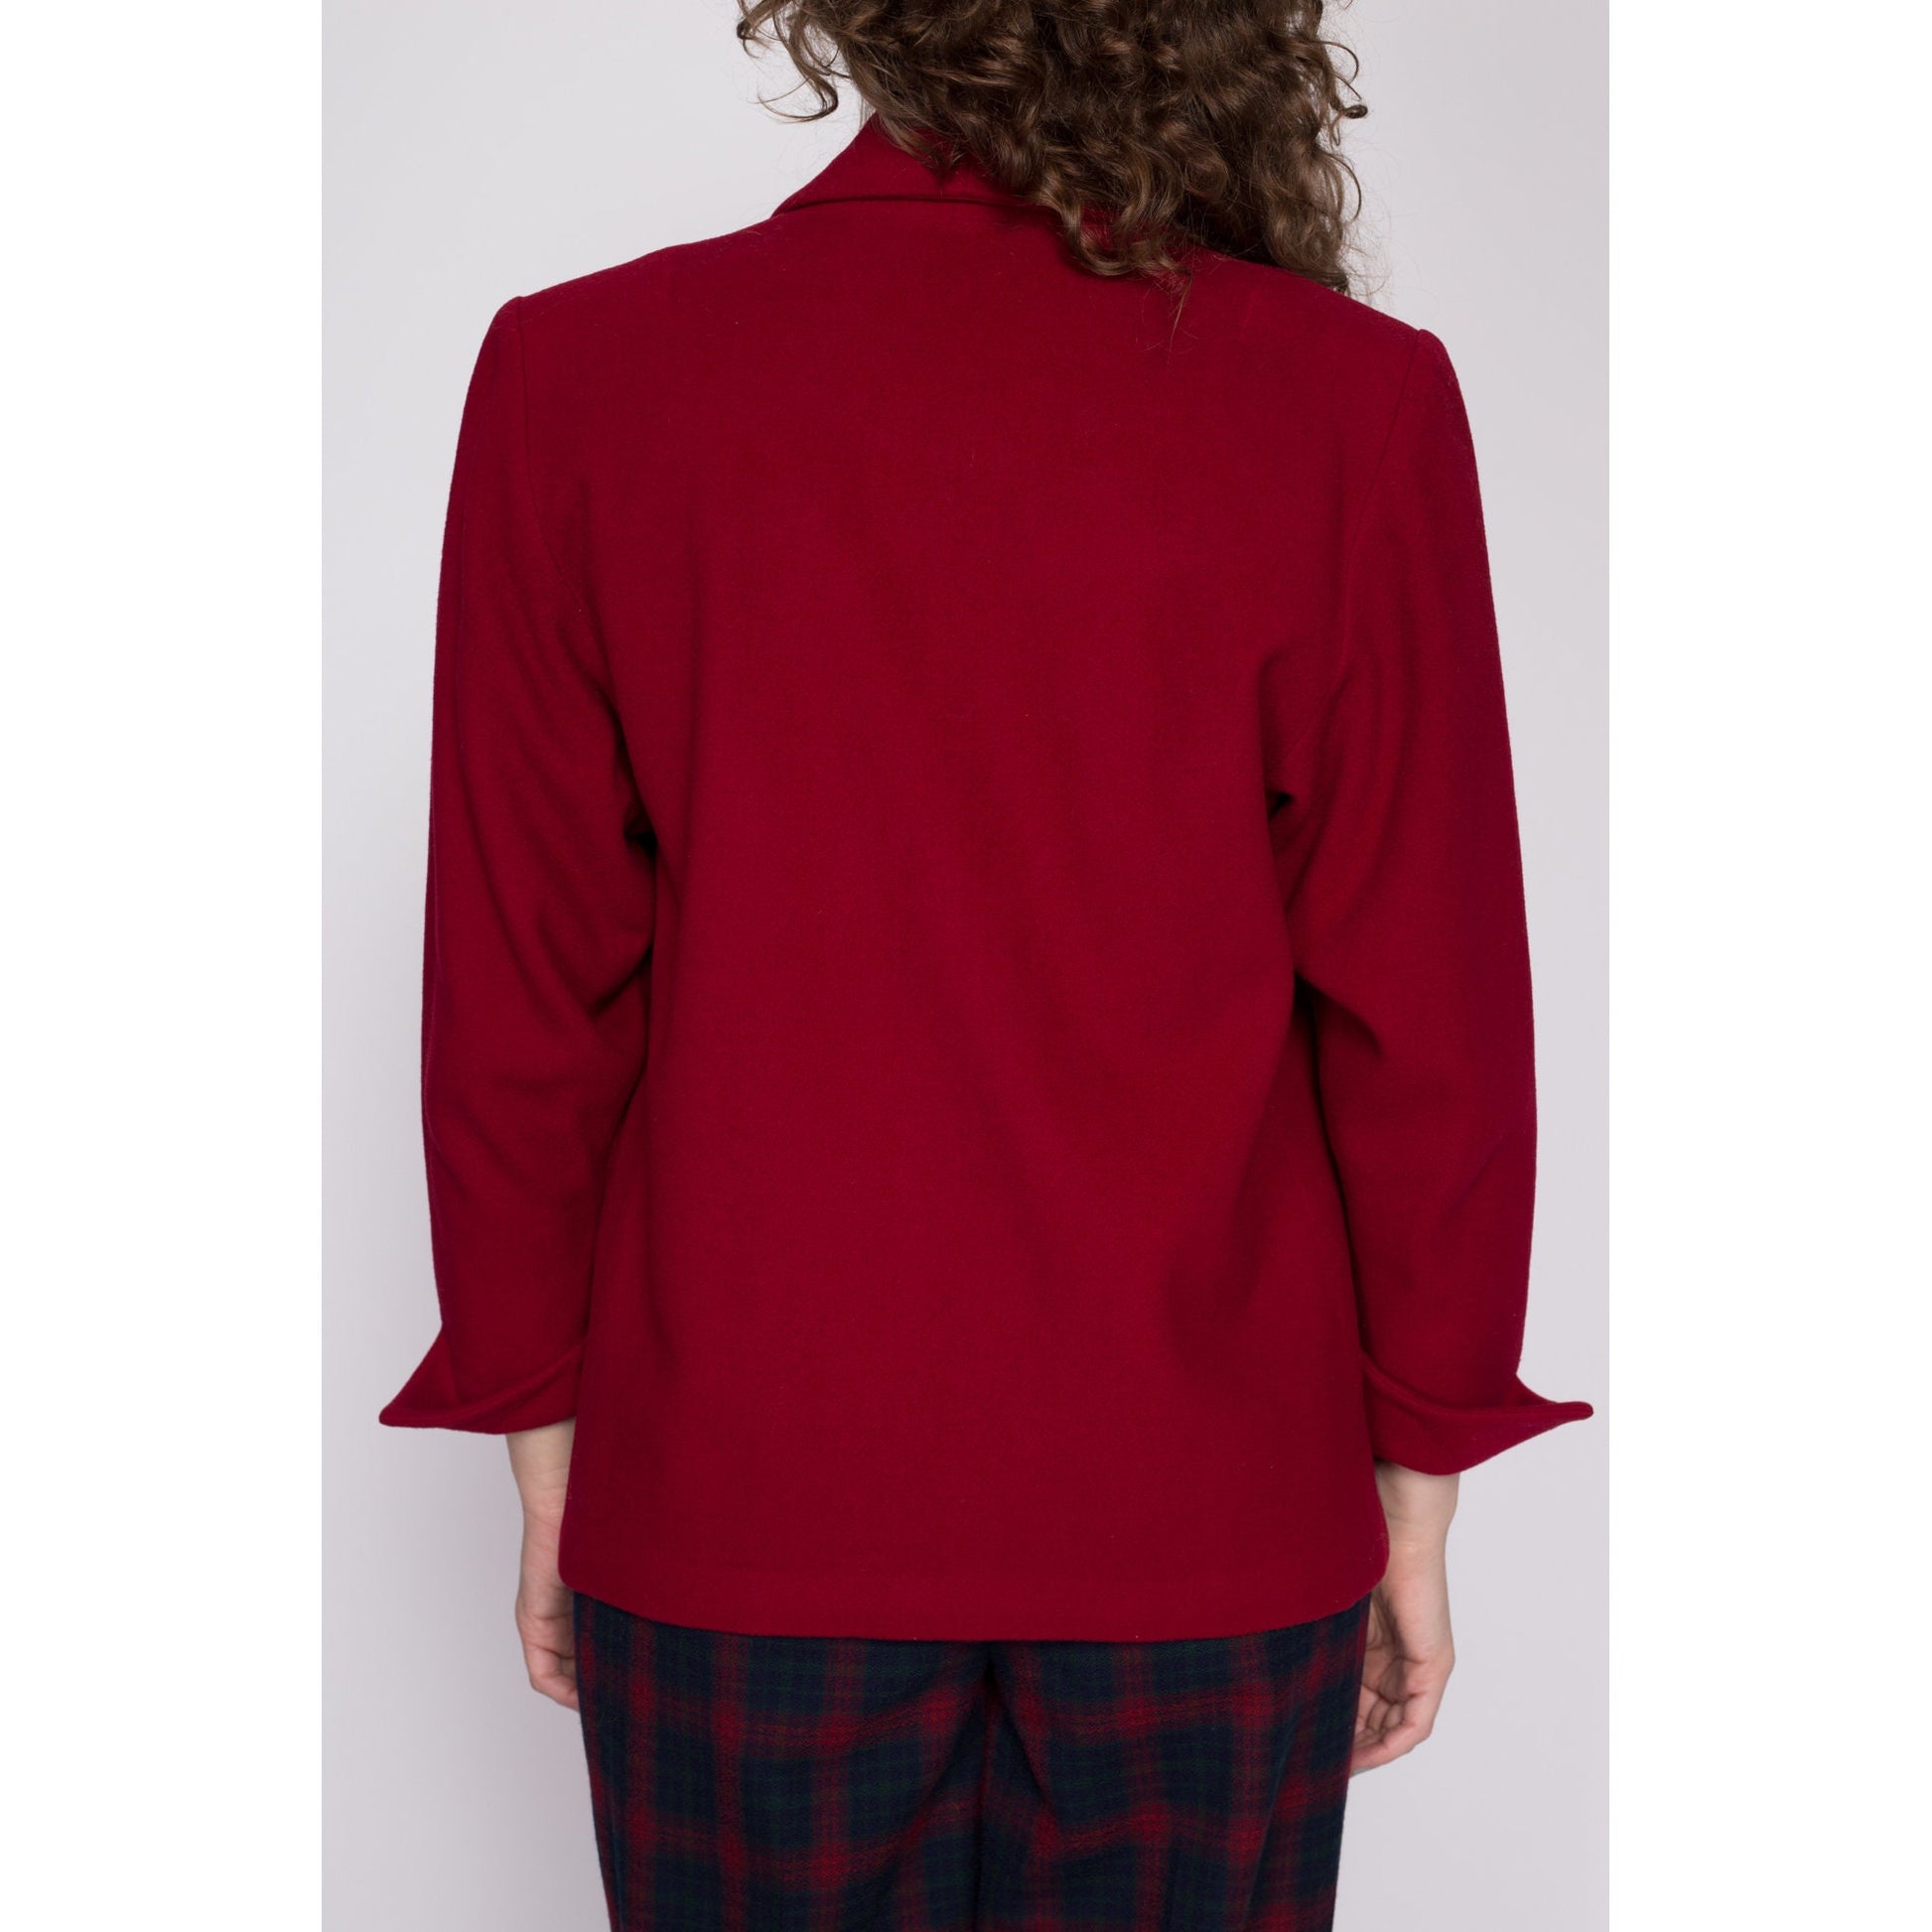 Medium 1940s Red Wool Blazer Jacket | Vintage 40s Open Fit Collared Dolman Sleeve Jacket